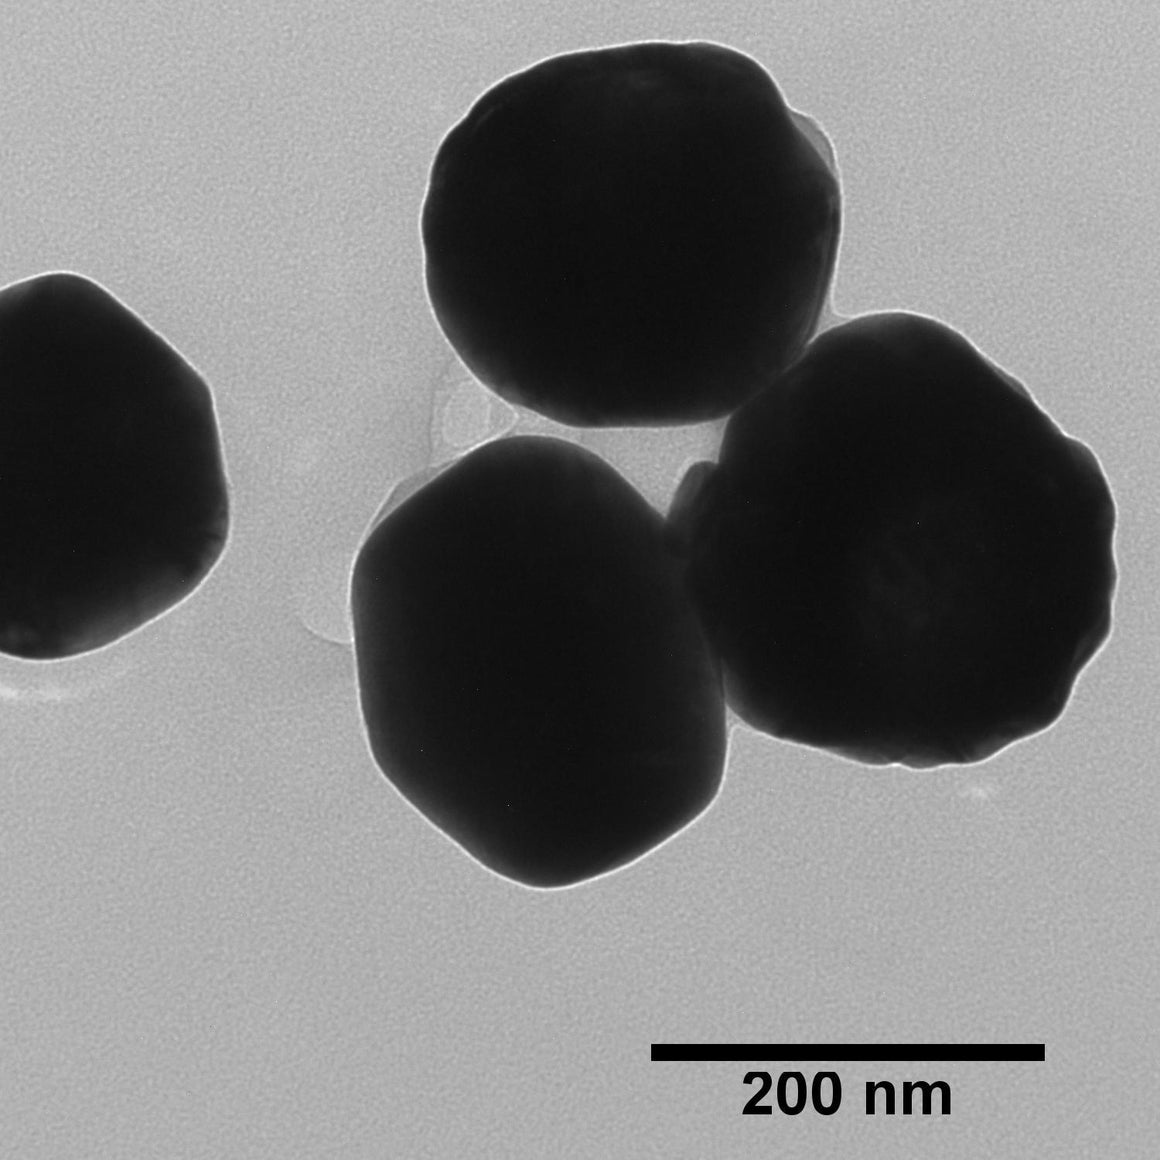 NanoXact Silver Nanospheres – Bare (Citrate)